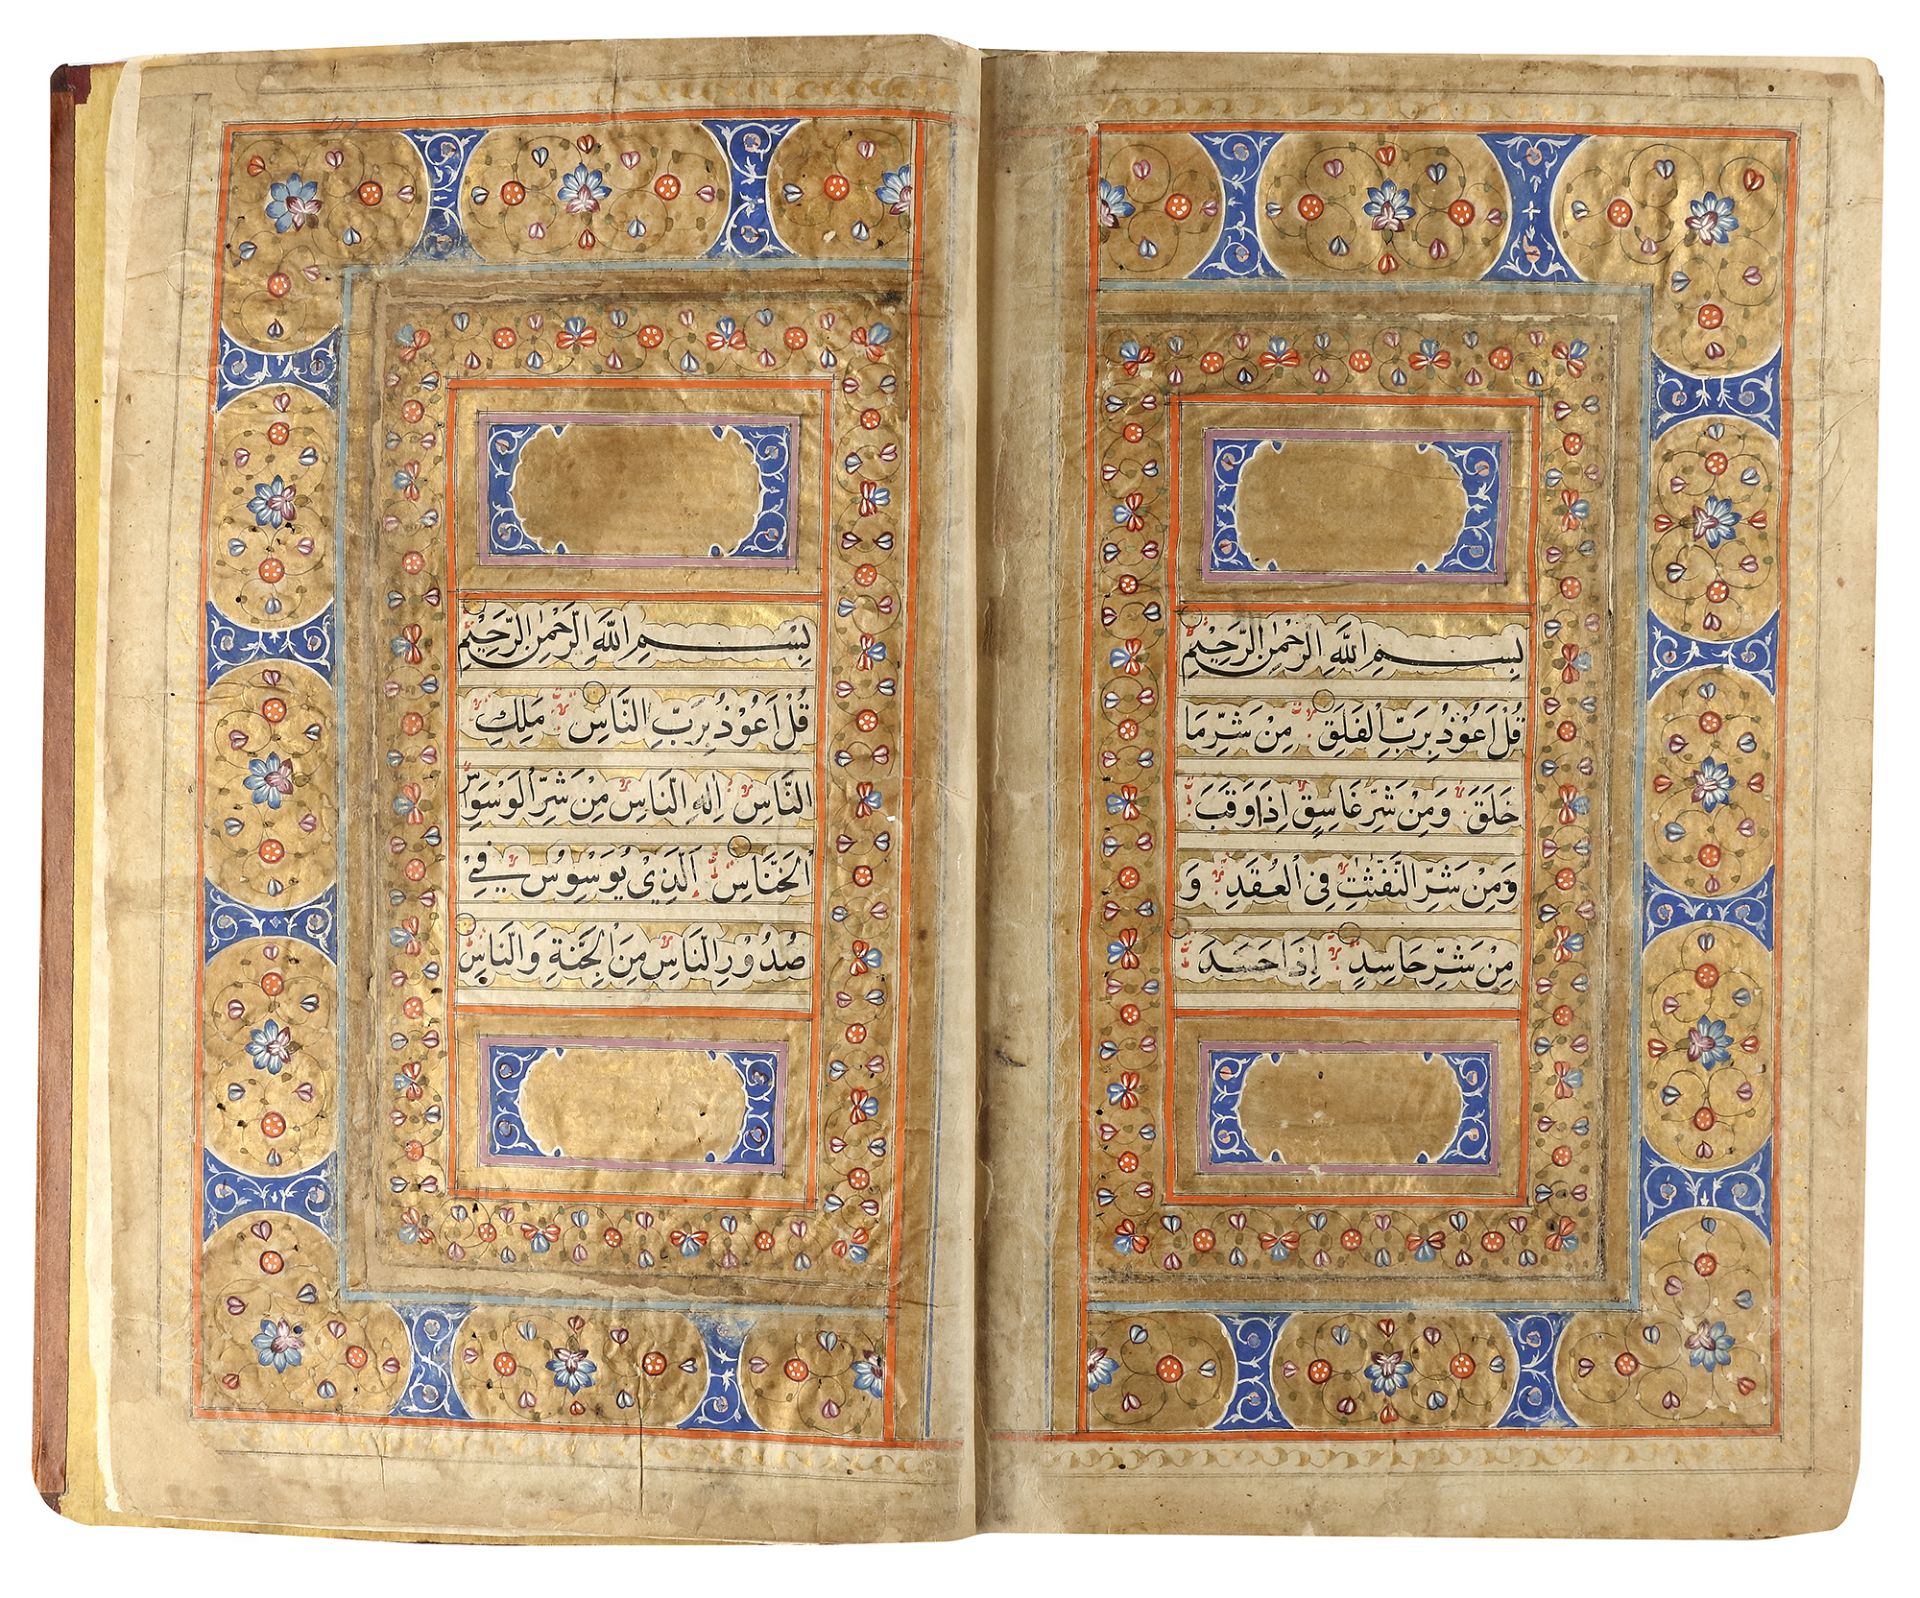 A KASHMIR LEATHER-BOUND QURAN, WRITTEN BY MUHAMMED SAIF AL-ALLAH AL-ANSARI AL-LAHORI, DATED 1248AH/1 - Image 5 of 7